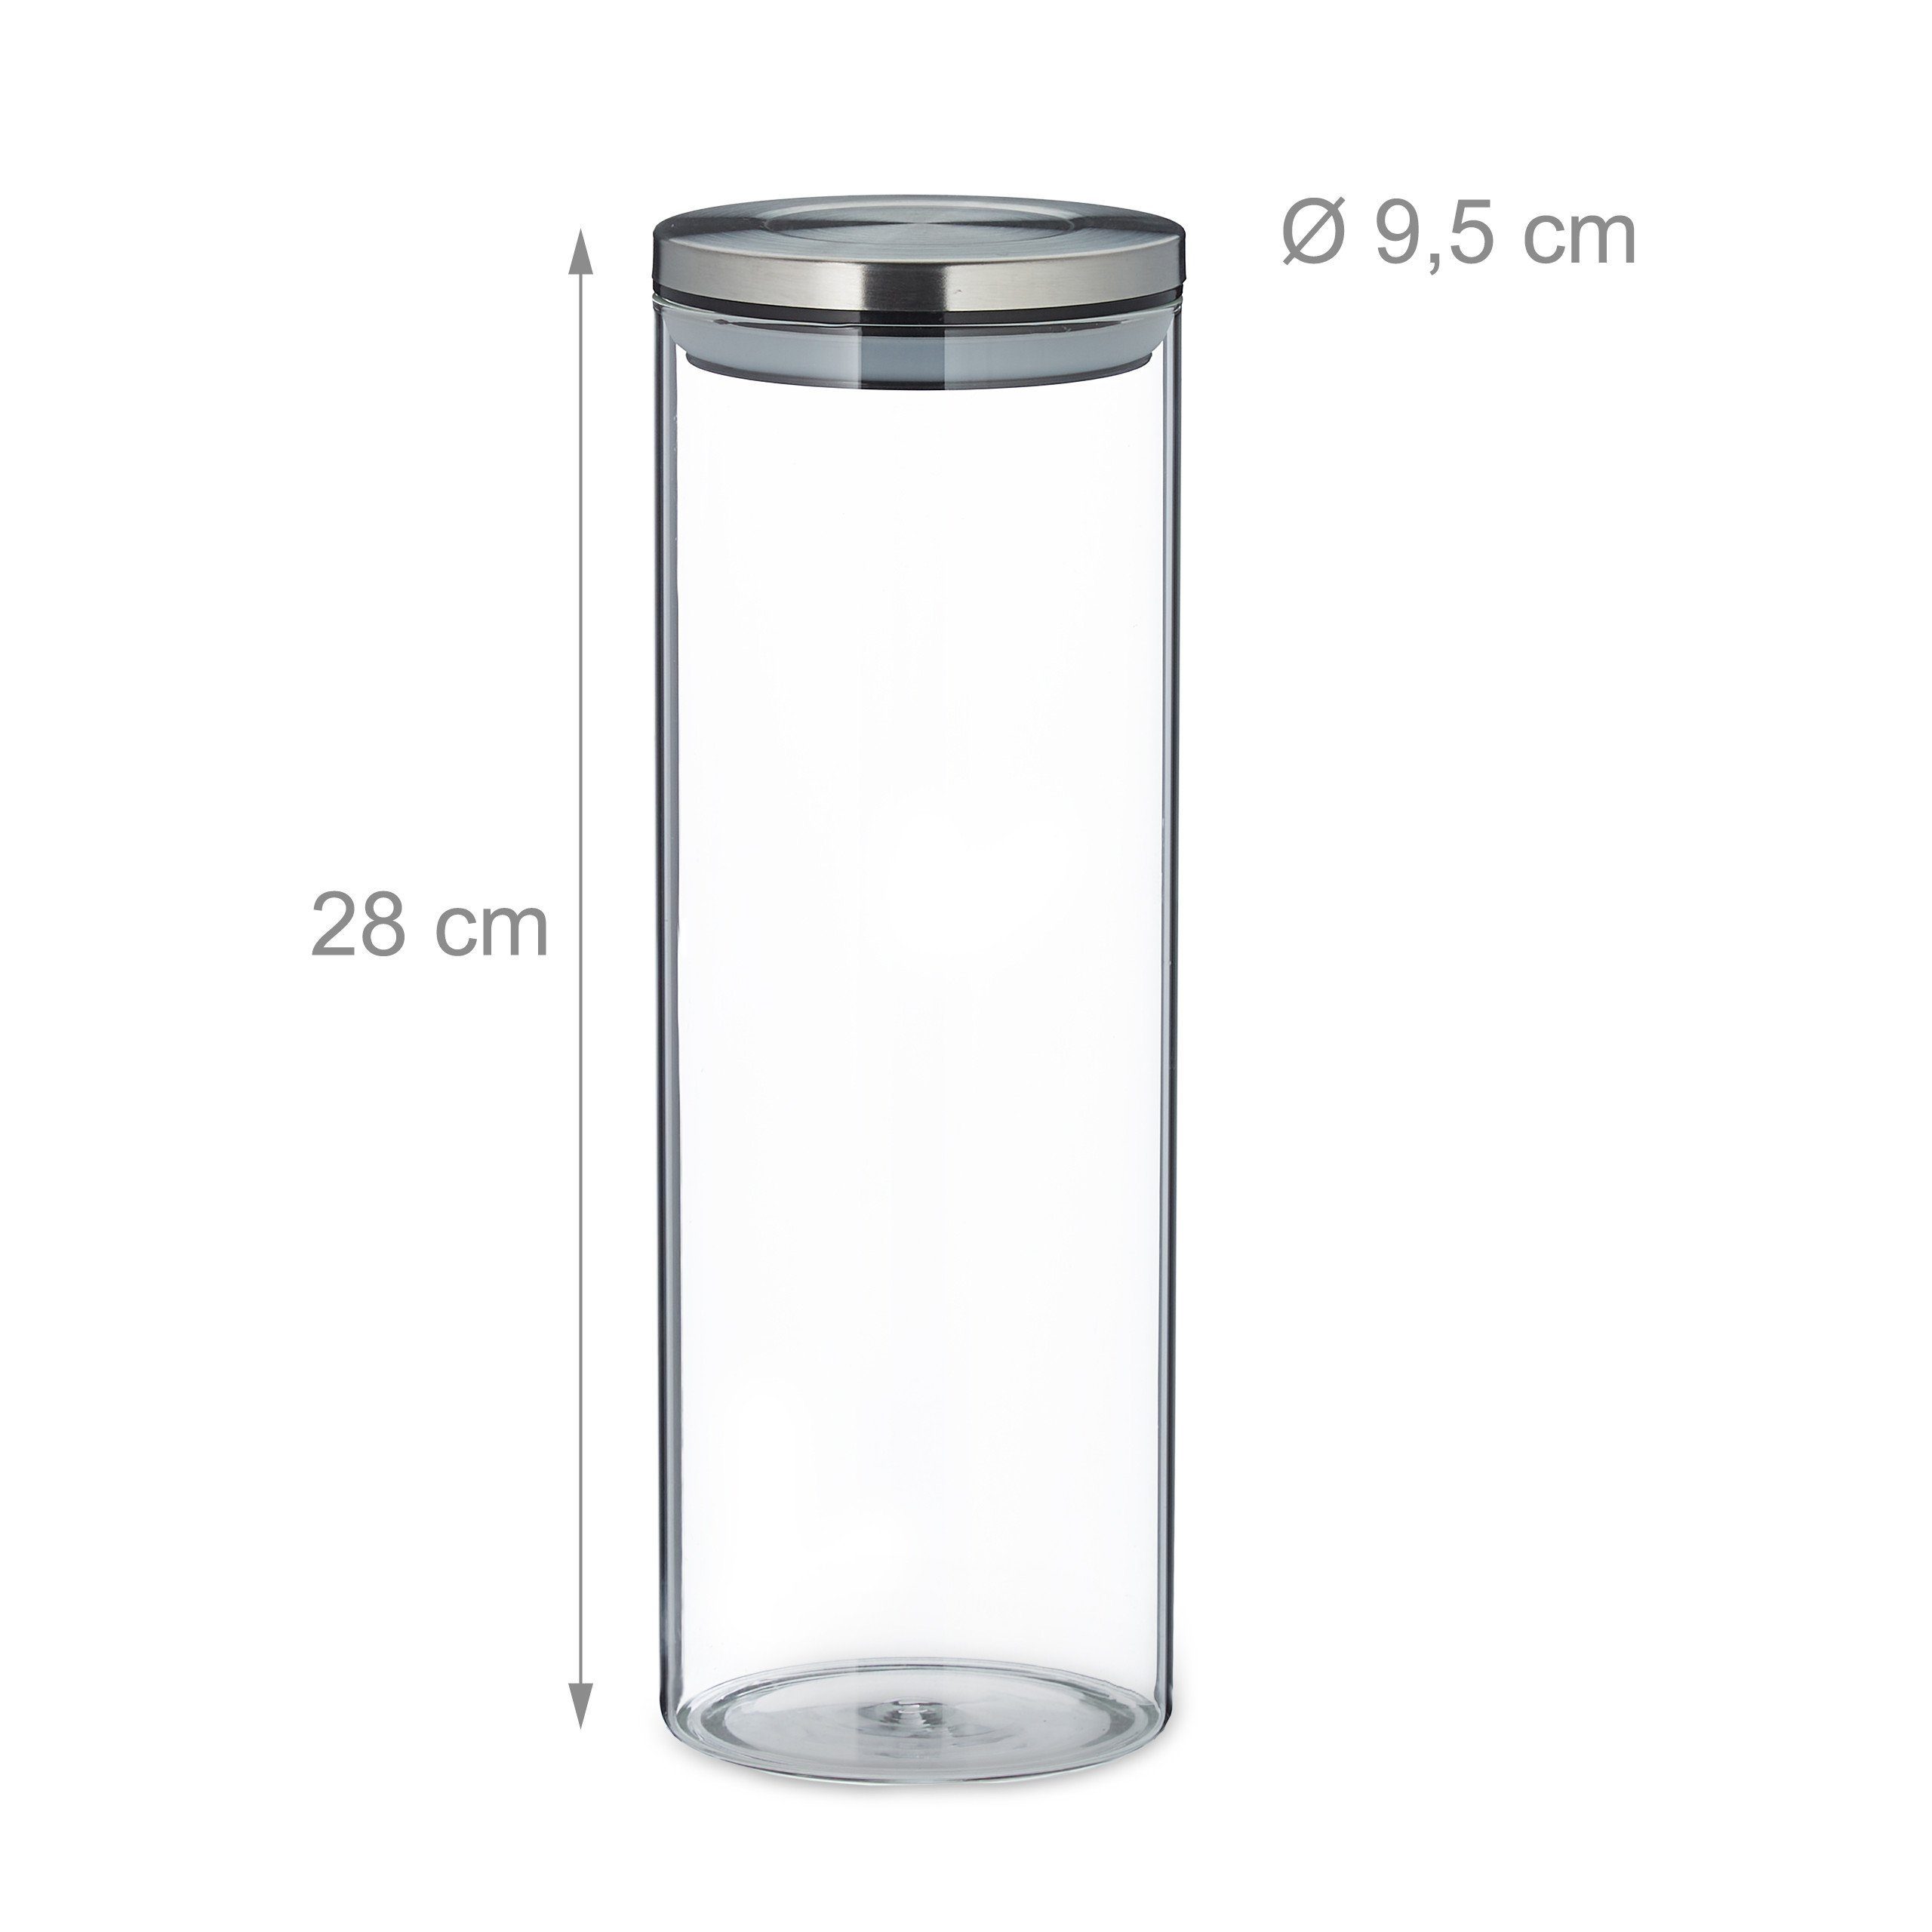 Vorratsglas 3er relaxdays Vorratsglas Set Liter, Glas 1,8